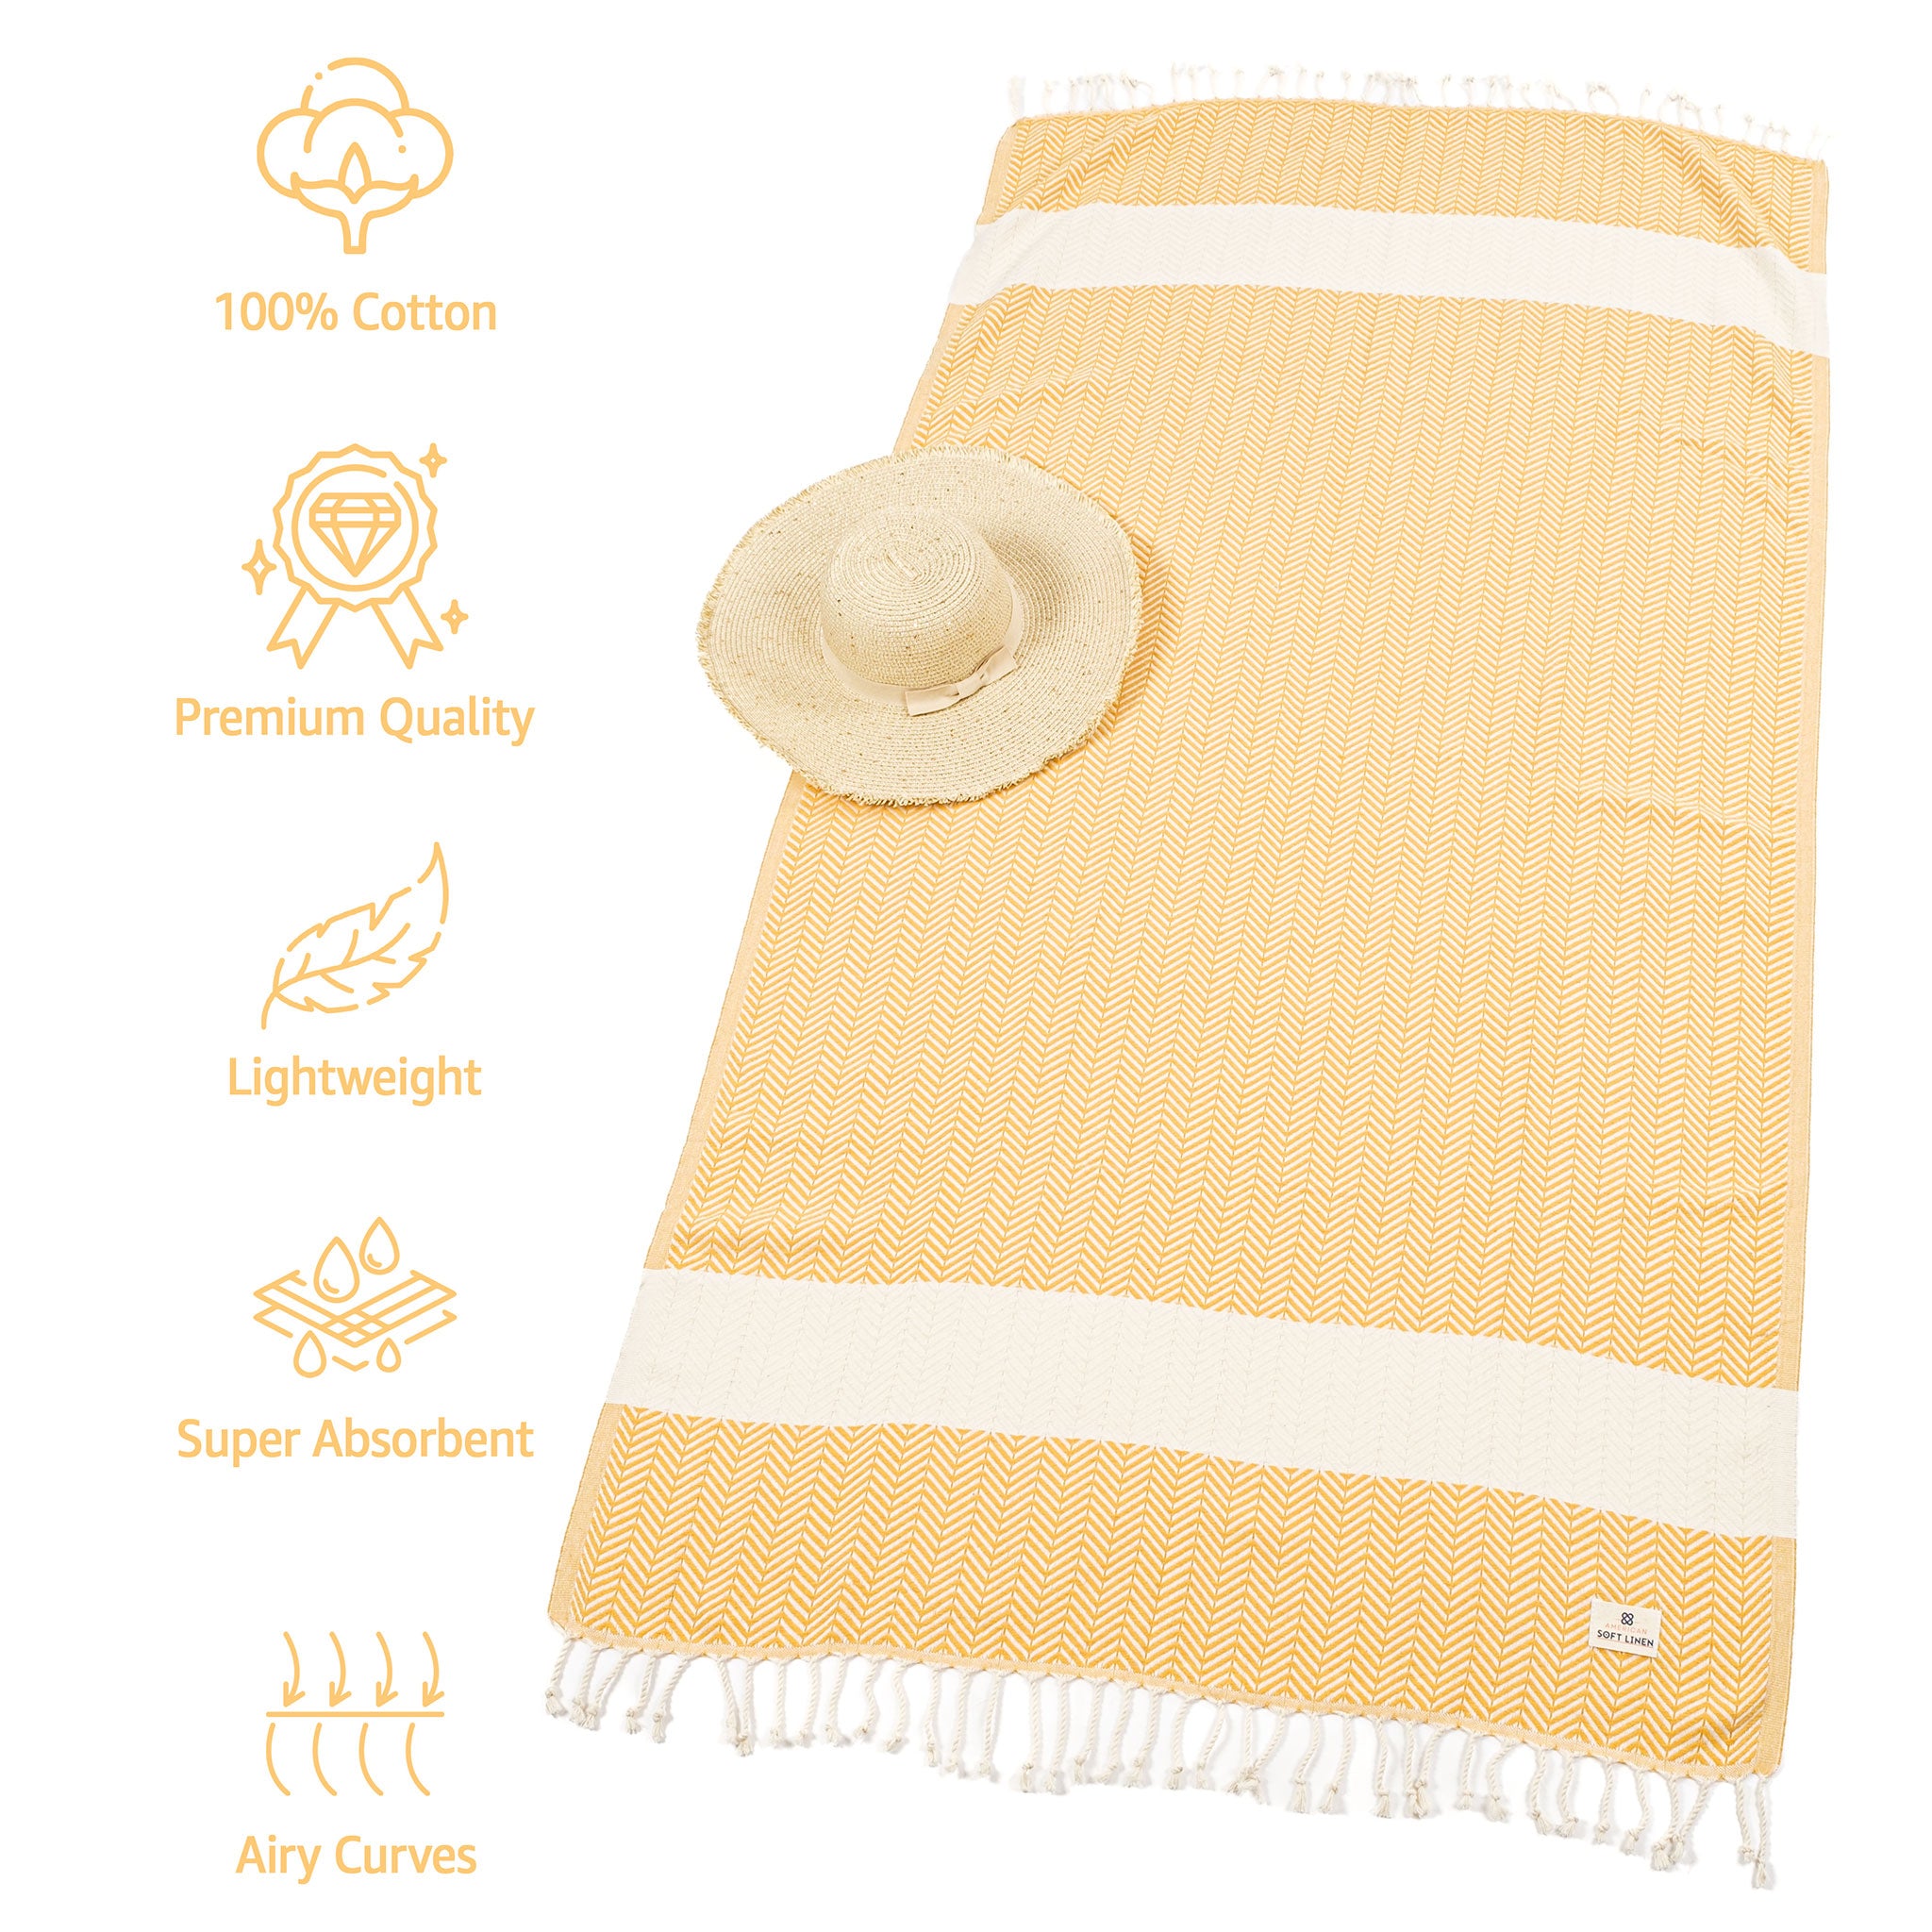 American Soft Linen - 100% Cotton Turkish Peshtemal Towels - 44 Set Case Pack - Yellow - 3